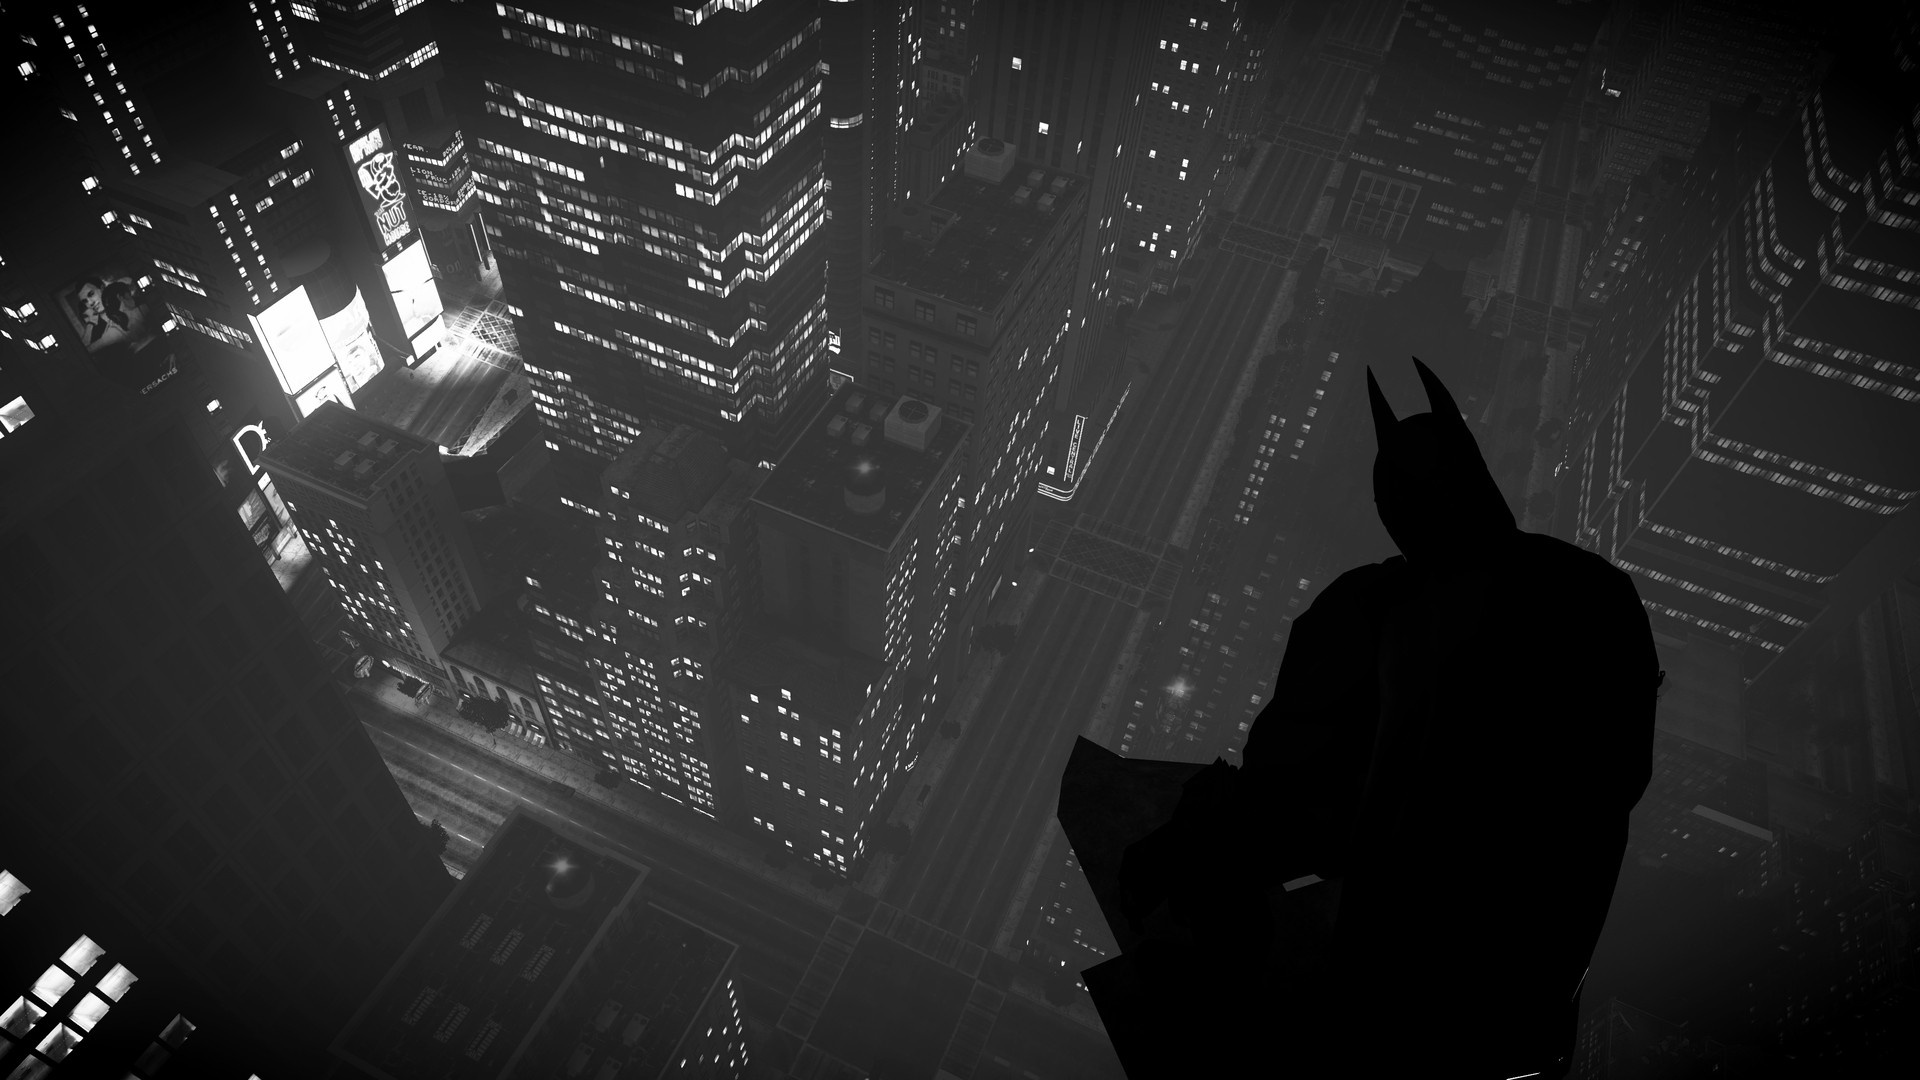 Gotham City movies, Vigilante on rooftops, Urban metropolis, Action-packed scenes, 1920x1080 Full HD Desktop